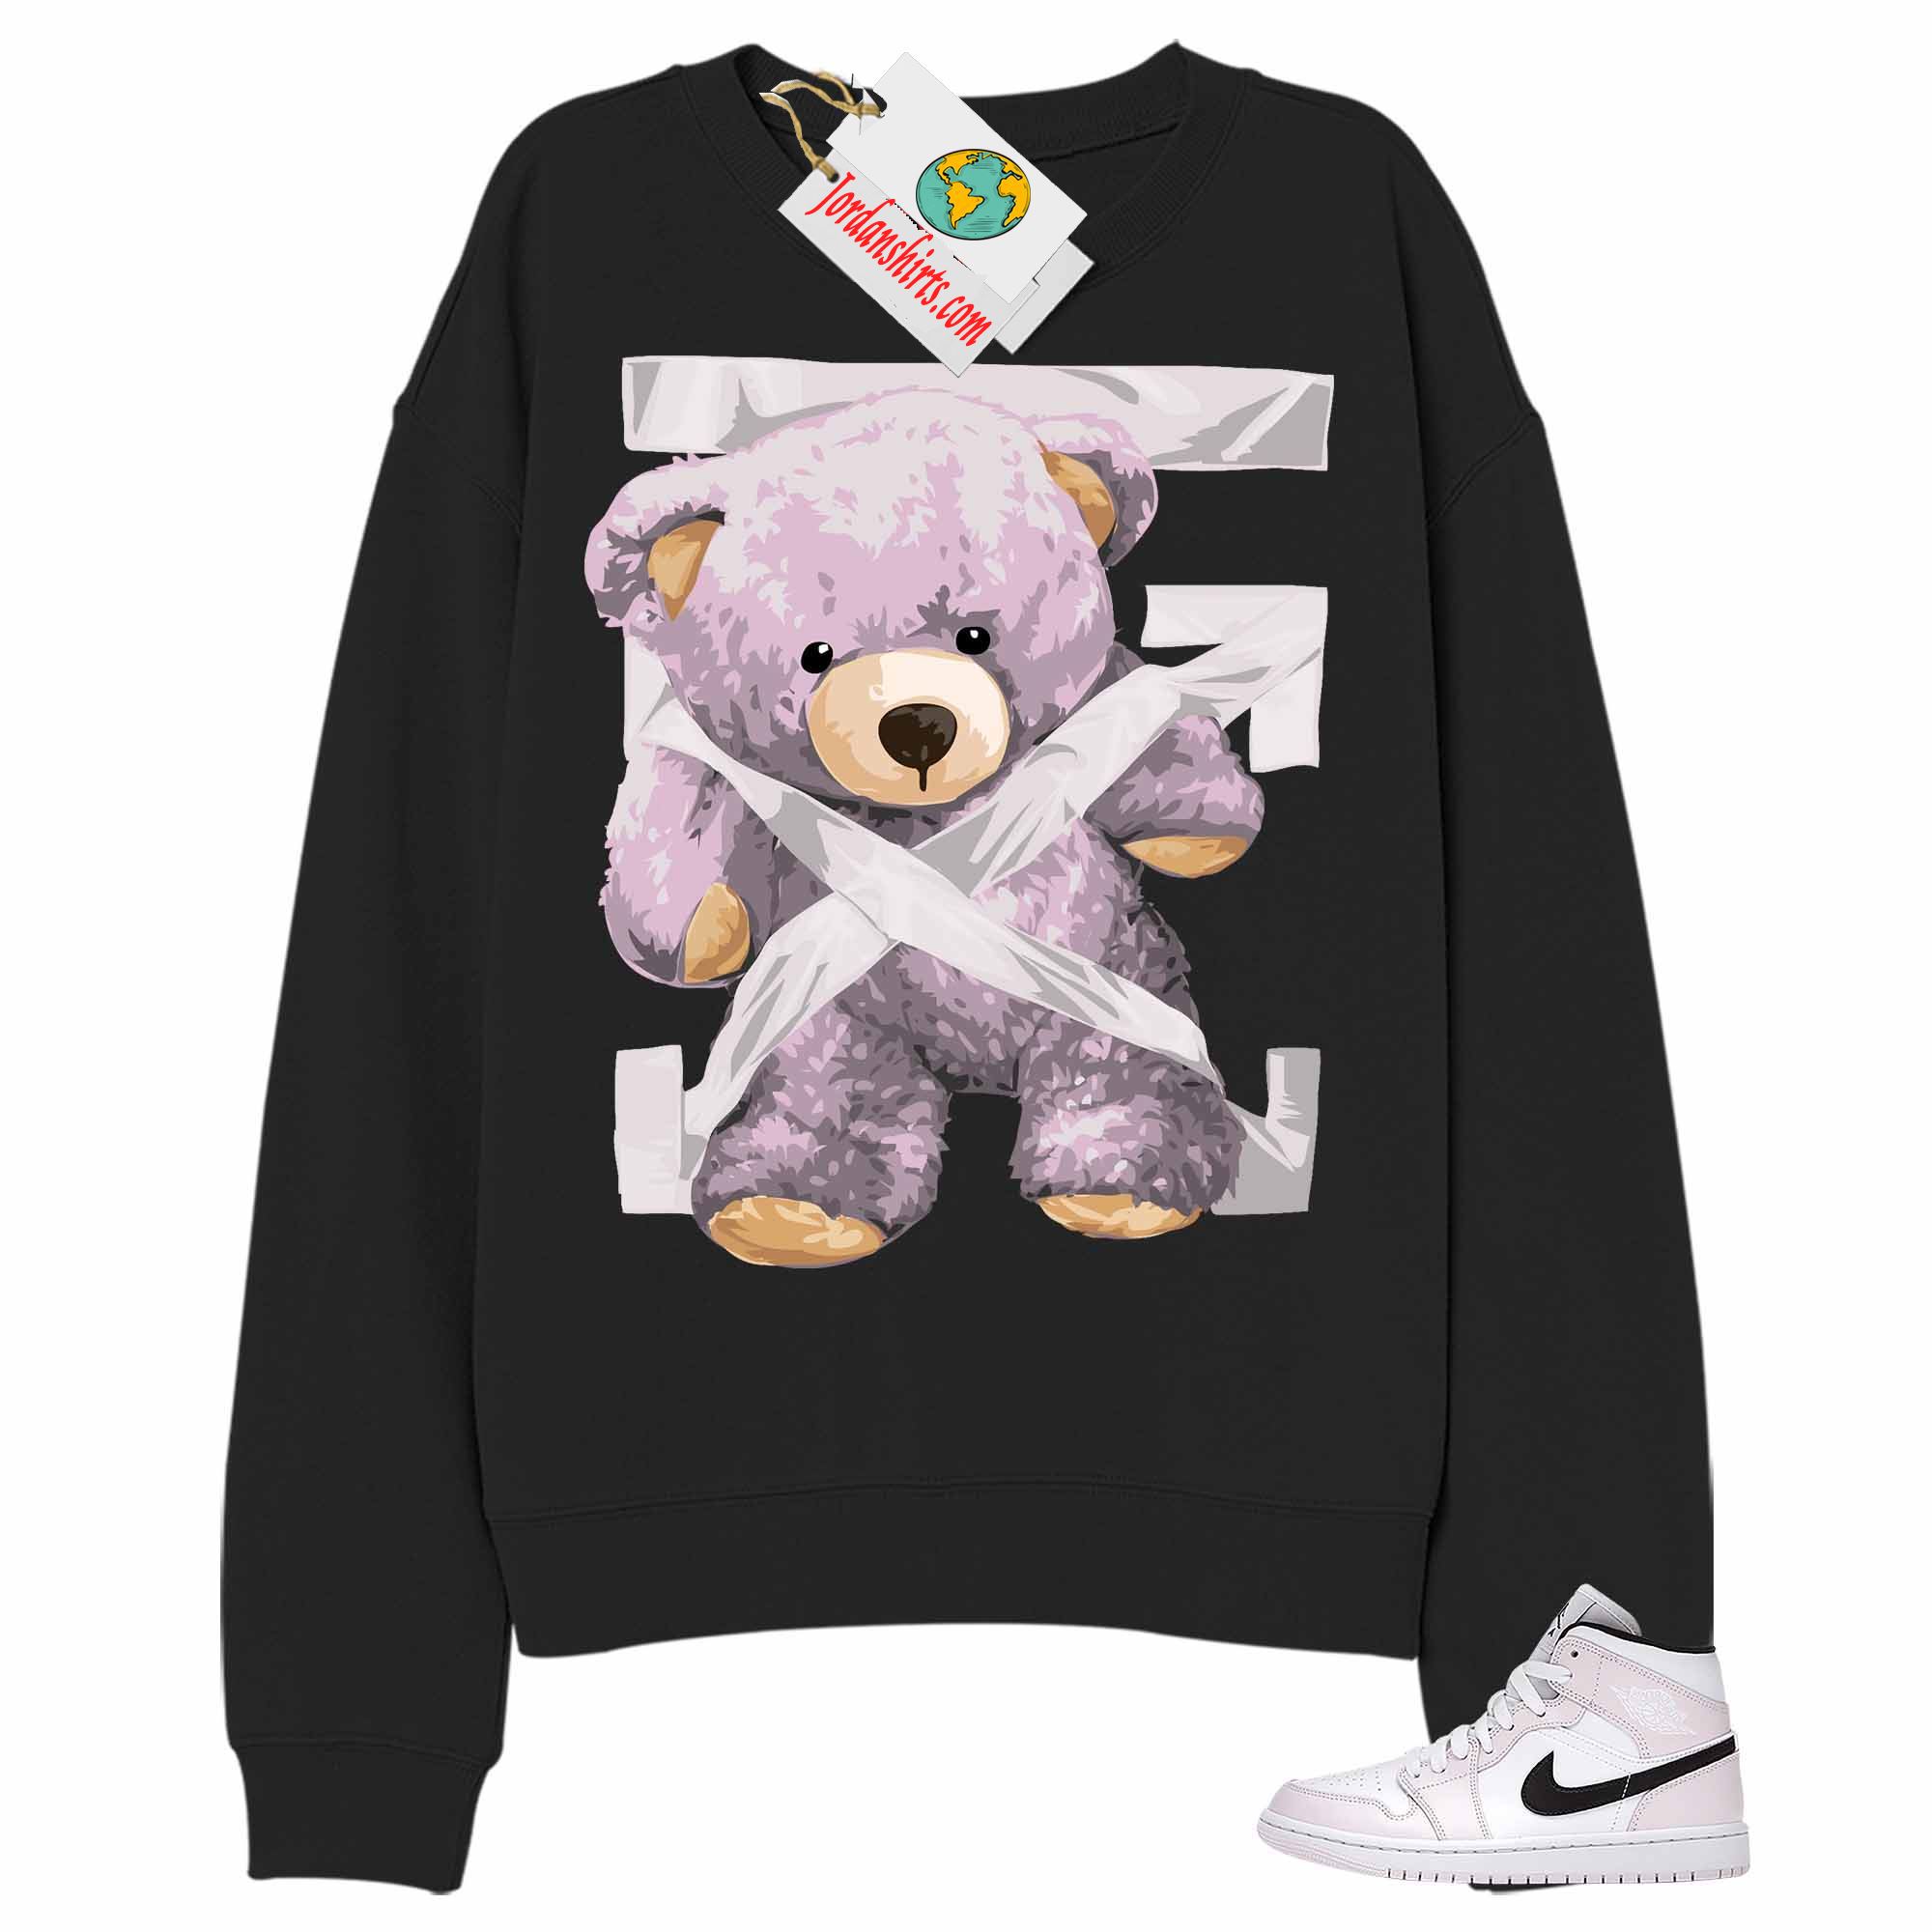 Jordan 1 Sweatshirt, Teddy Bear Duck Tape Black Sweatshirt Air Jordan 1 Barely Rose 1s Full Size Up To 5xl